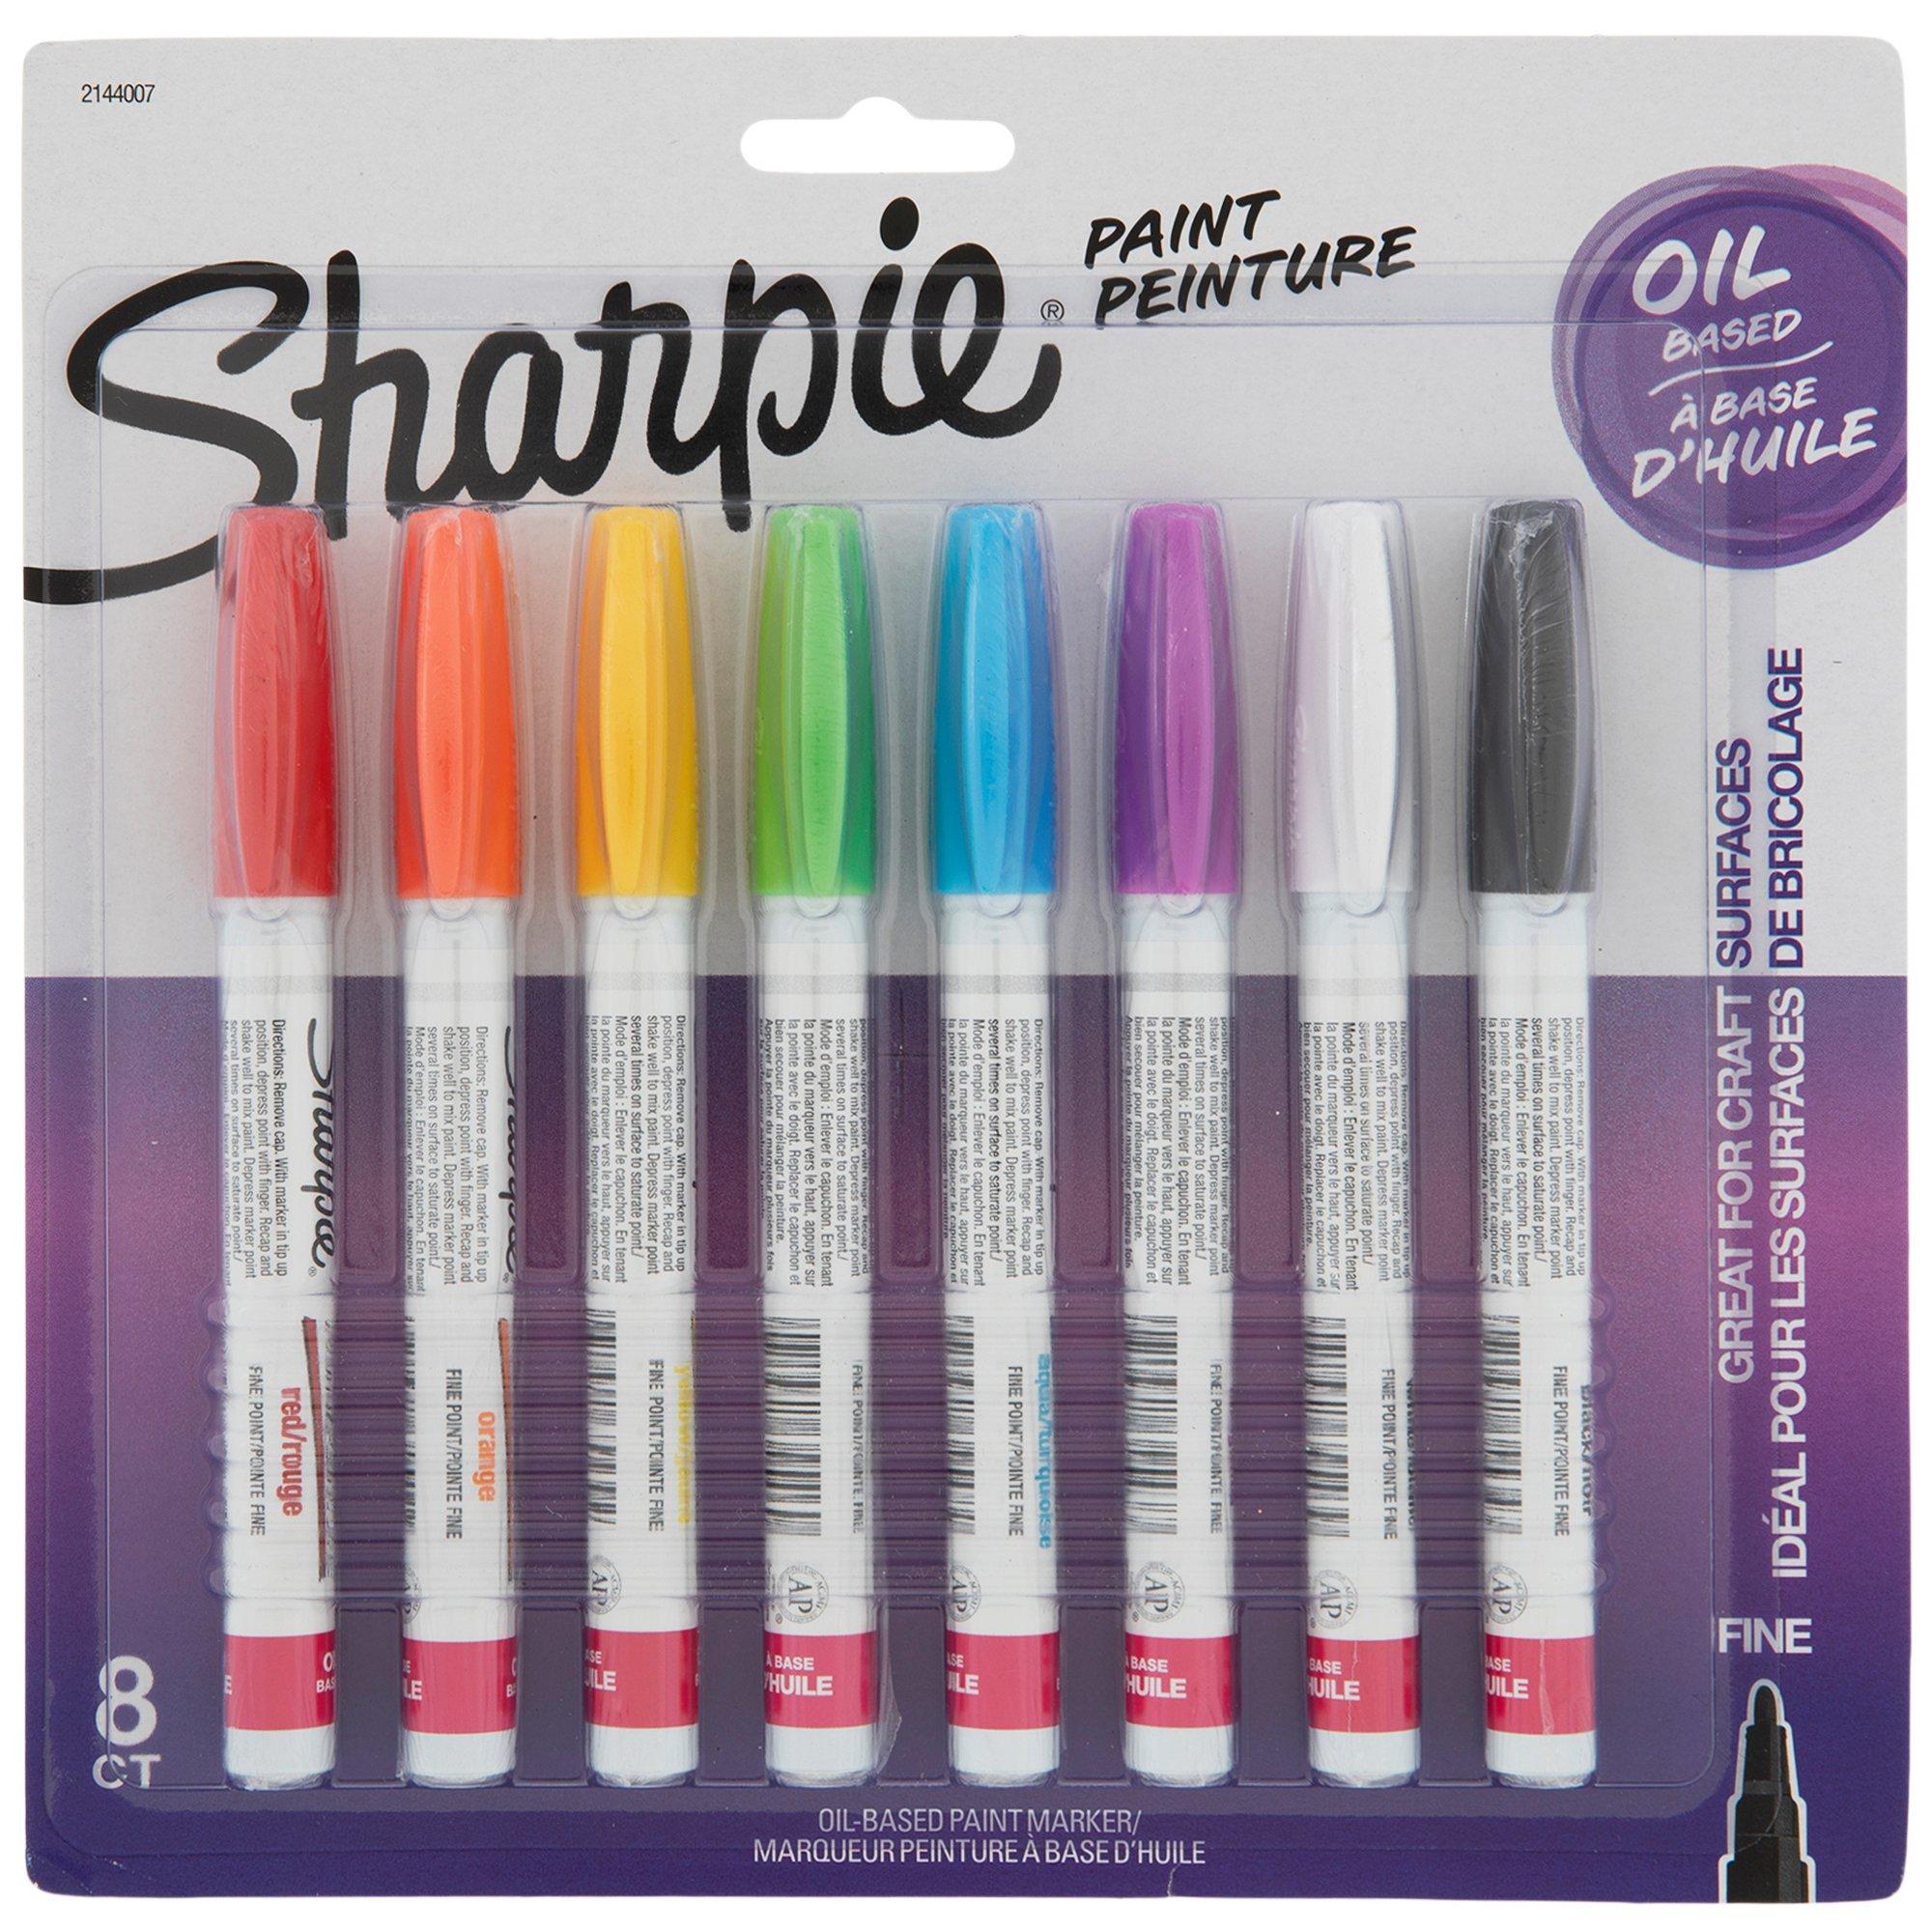 Sharpie - Paint Pen Marker: White, Oil-Based, Extra Fine Point - 56318926 -  MSC Industrial Supply